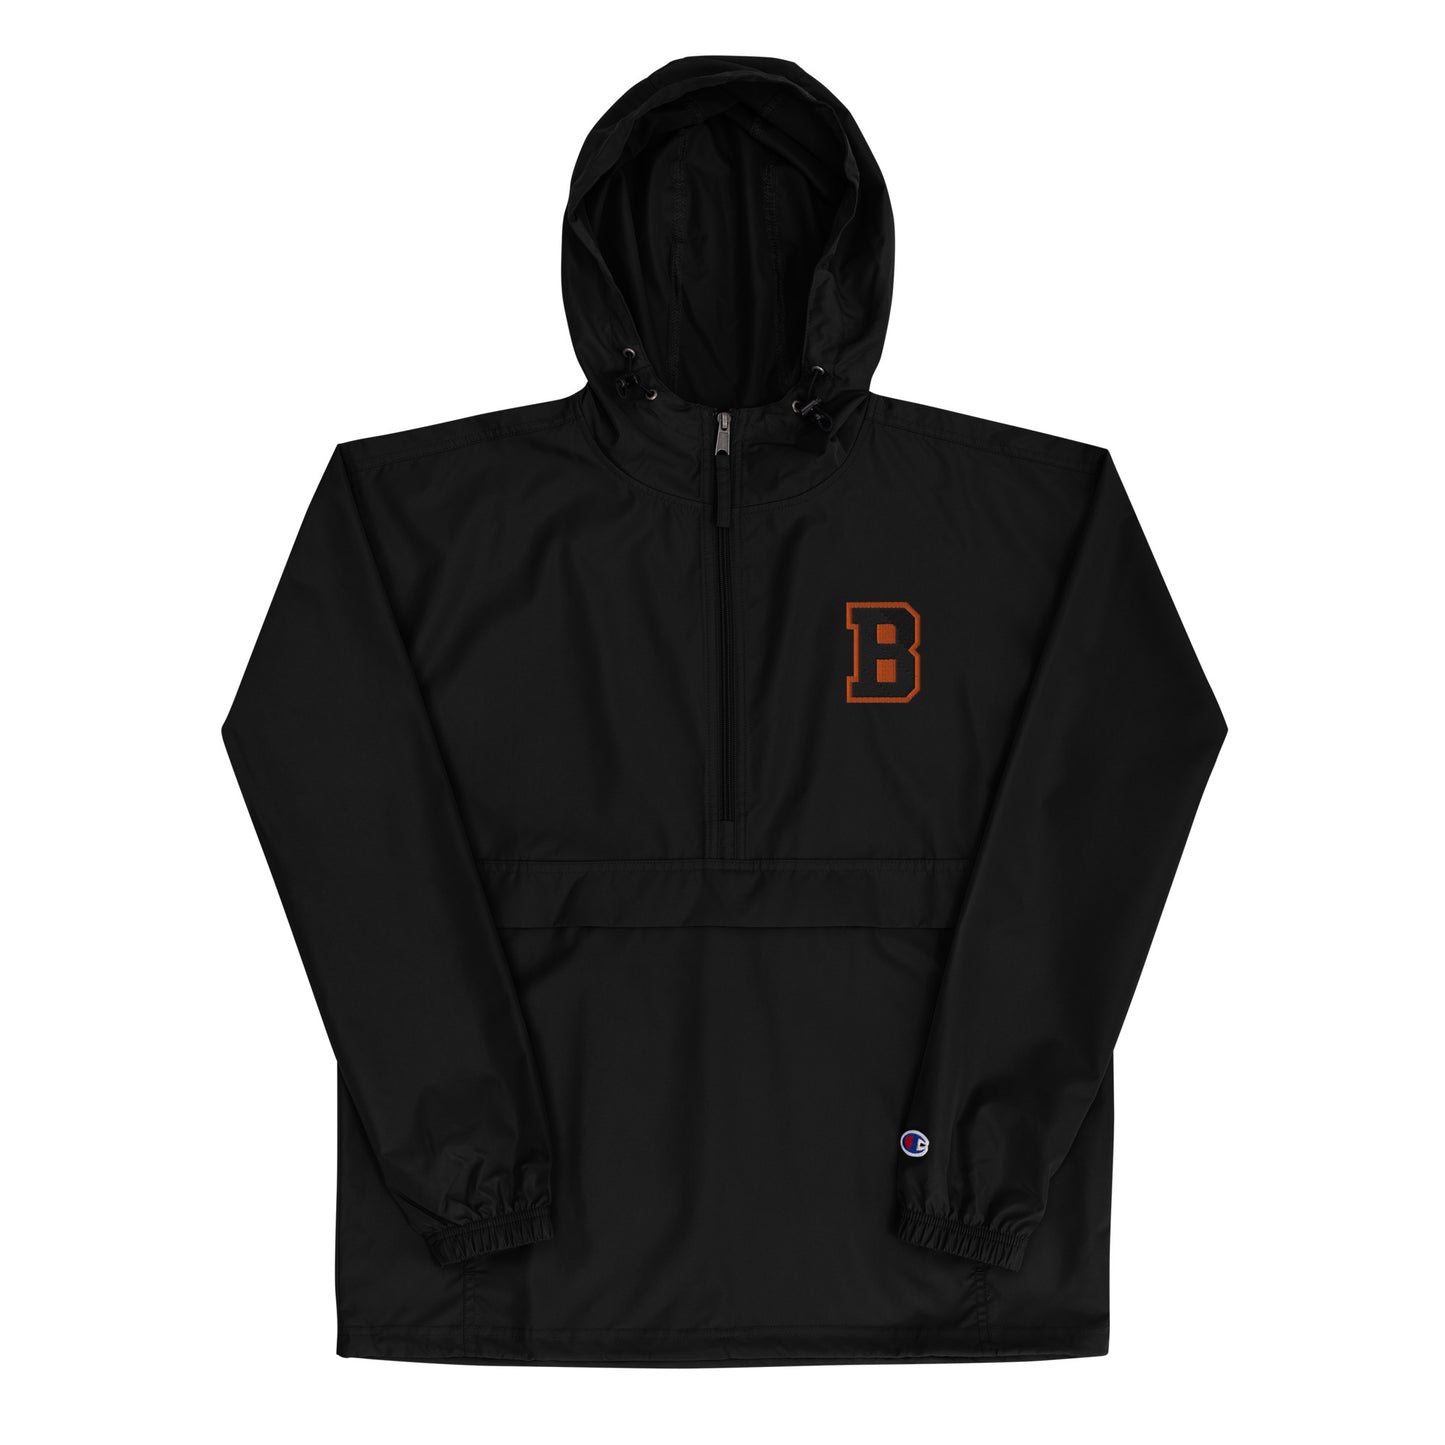 WBLHSB B Packable Jacket